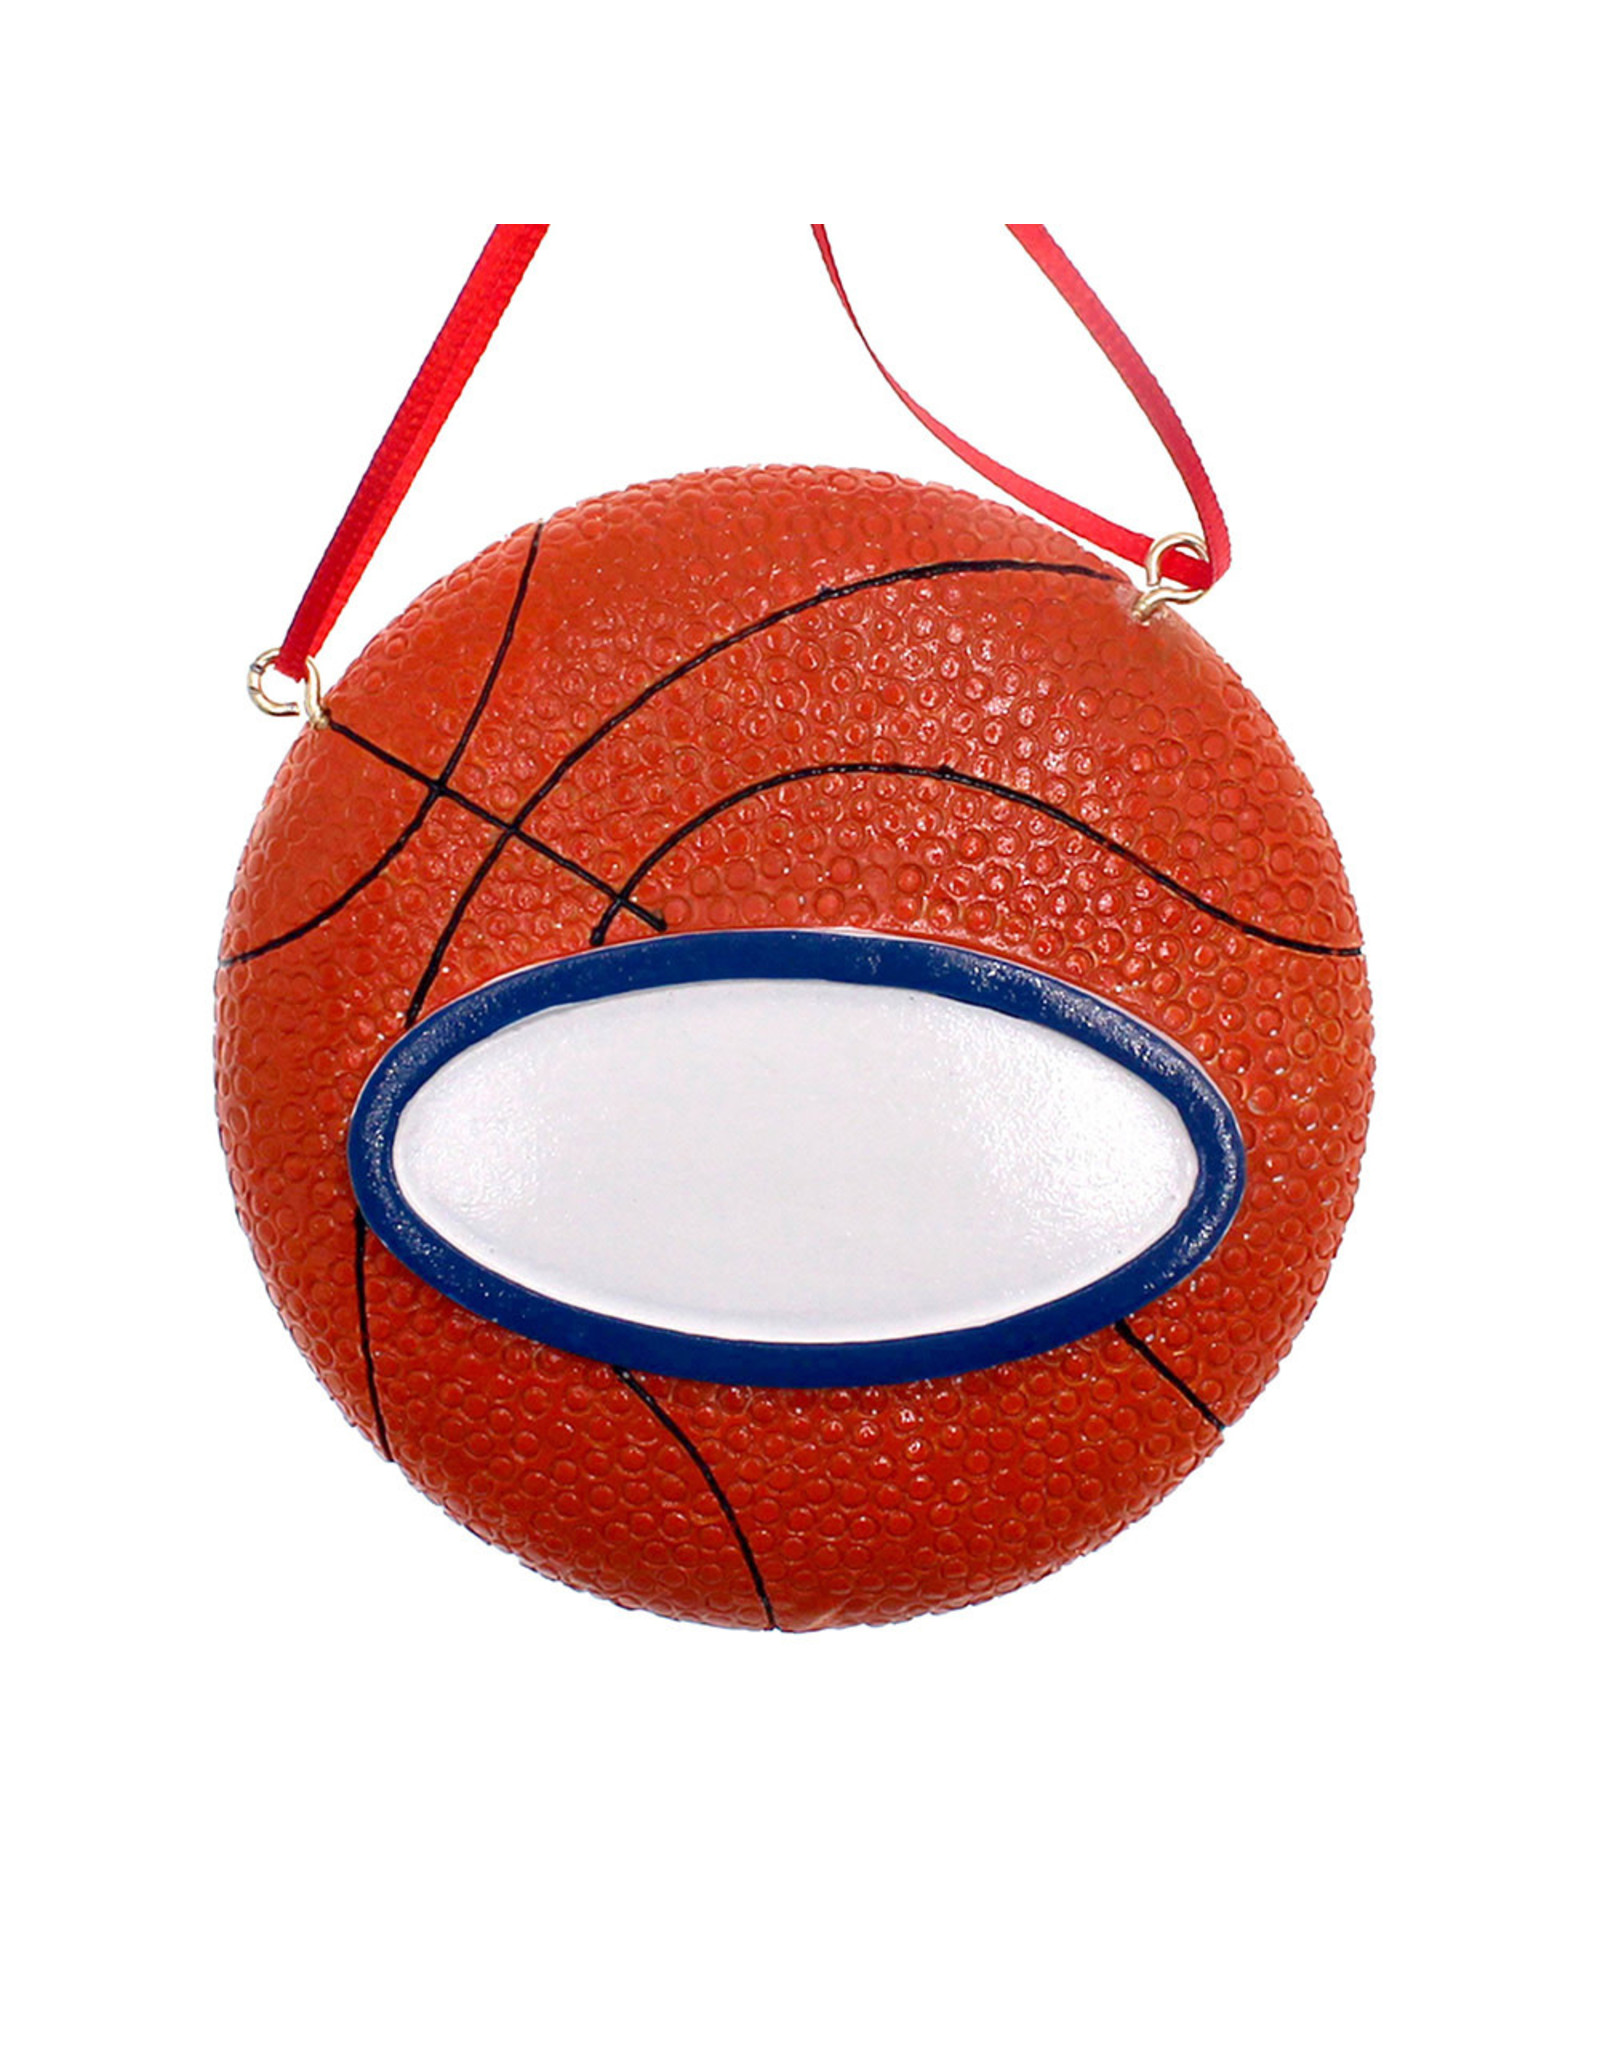 Kurt Adler Basketball Christmas Ornament For Personalization